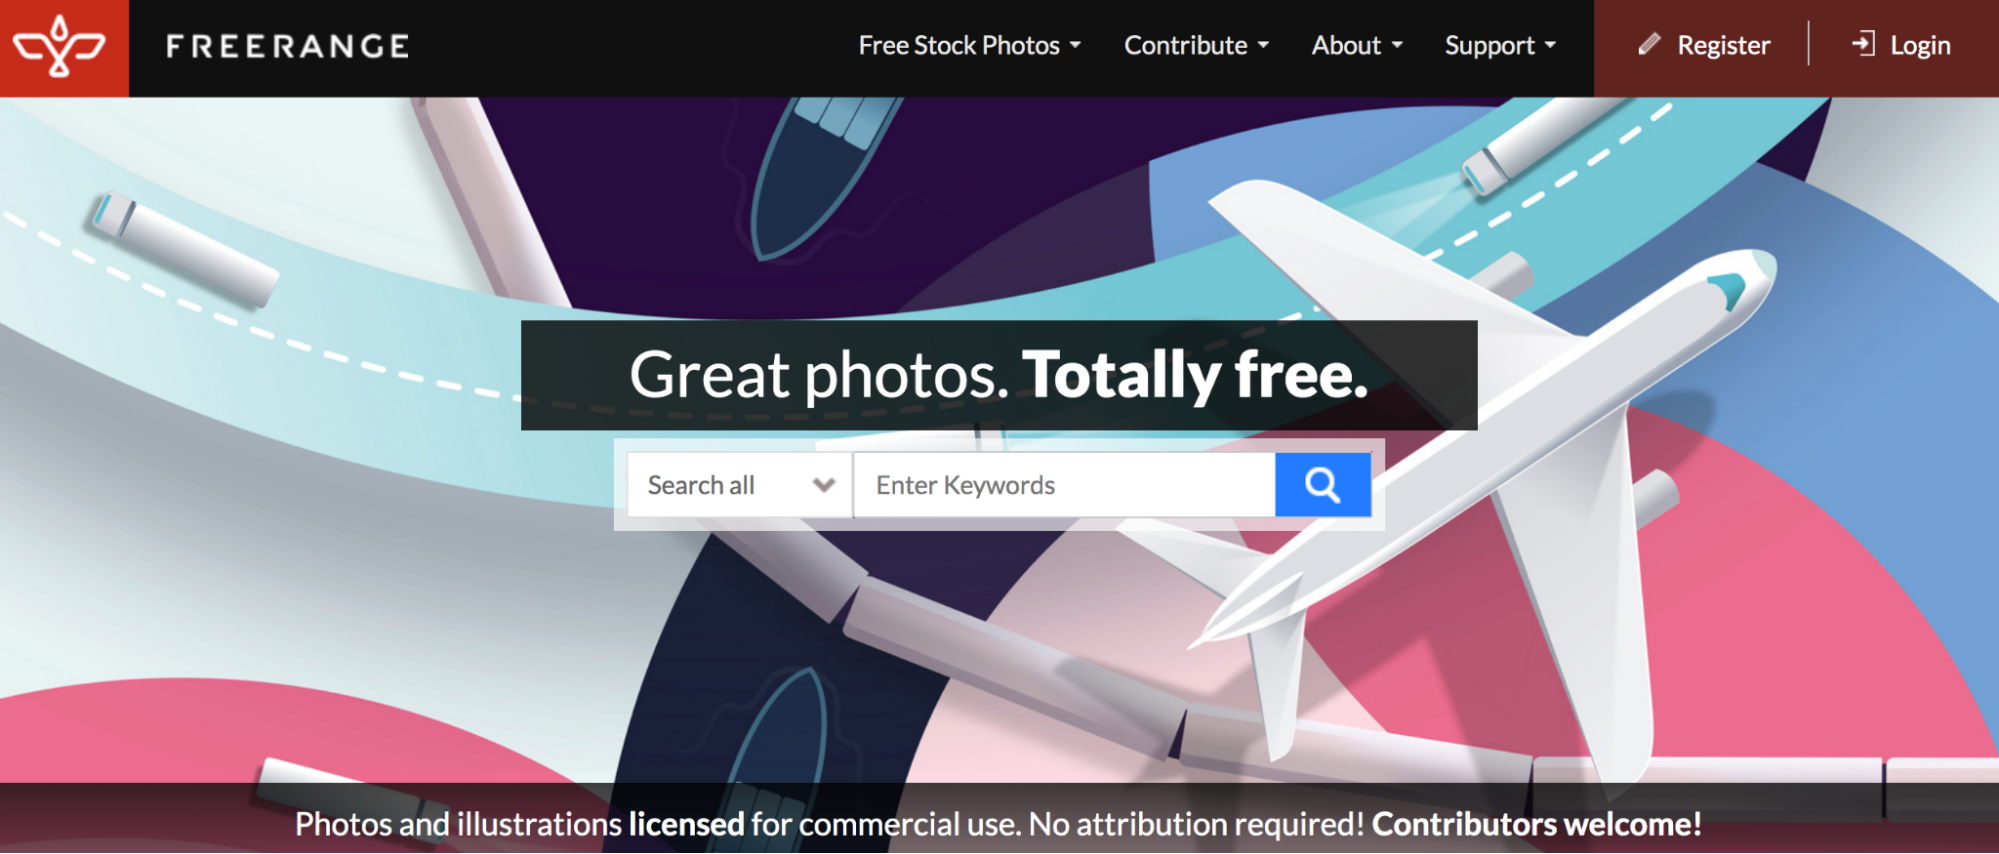 freerange free stock photo site homepage